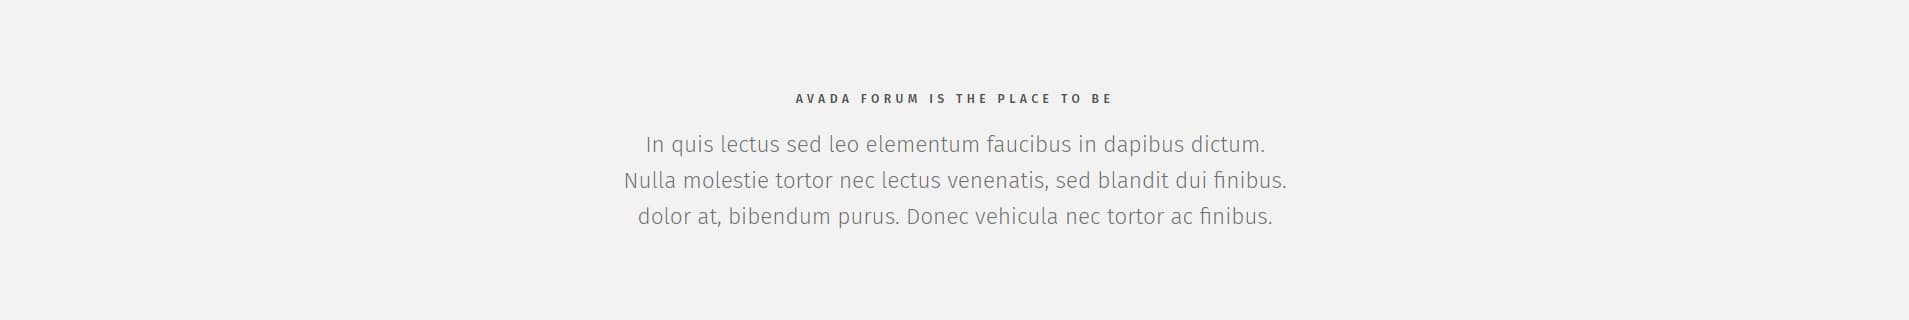 Avada Forum More Information